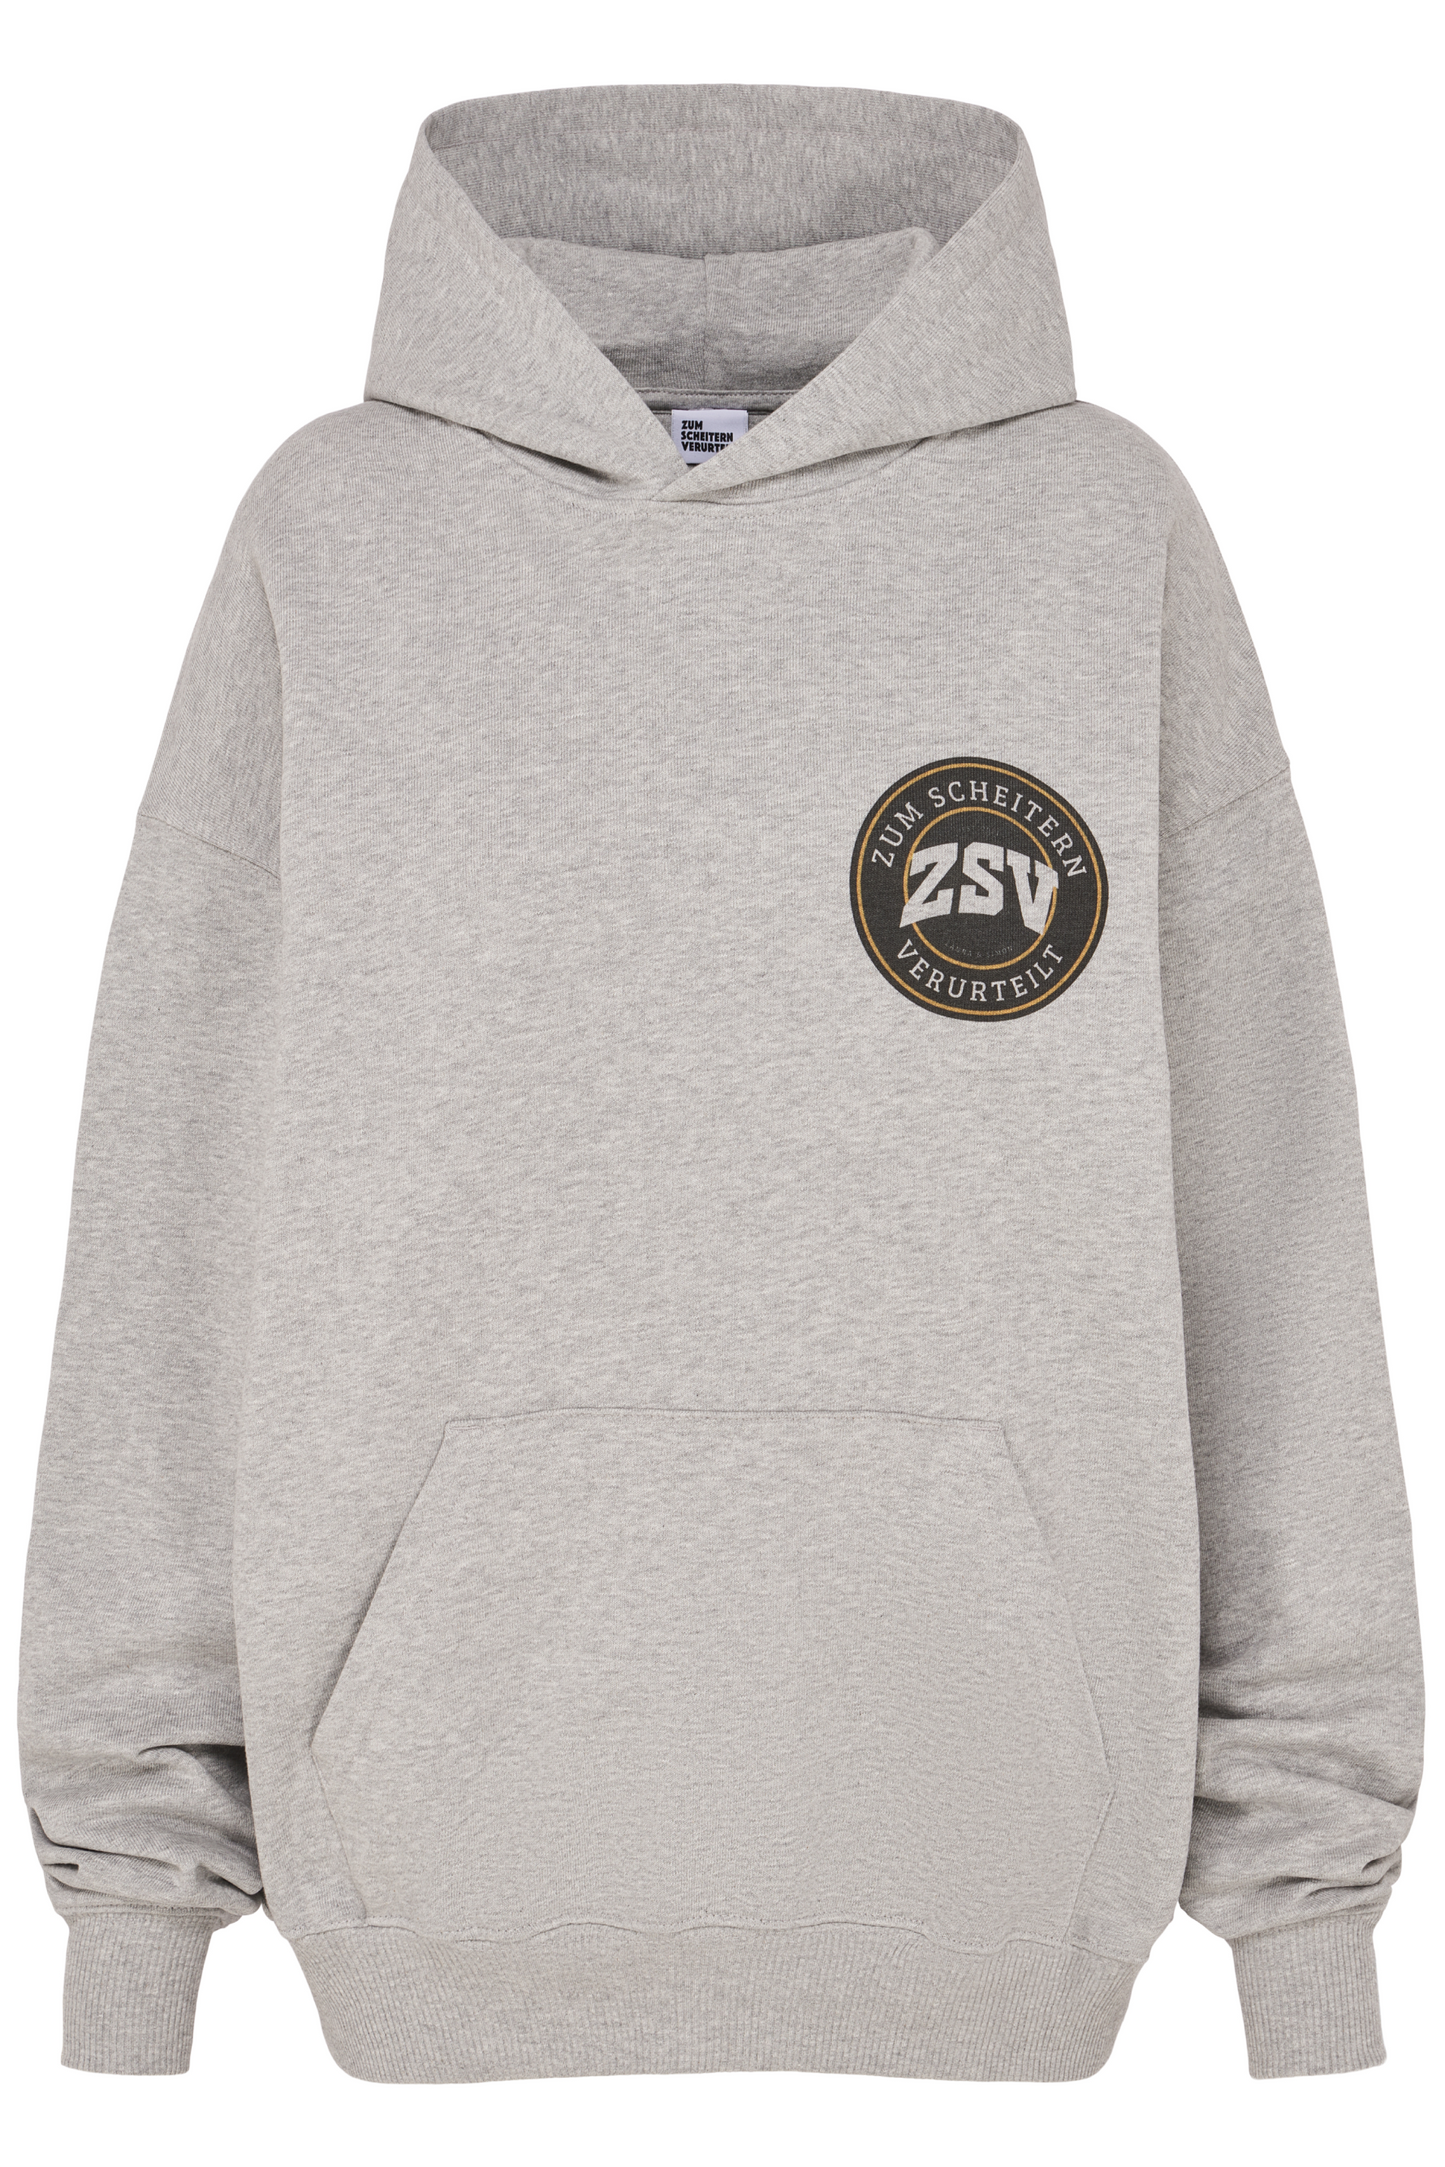 ZSV Logo Hoodie College Style - unisex Grau